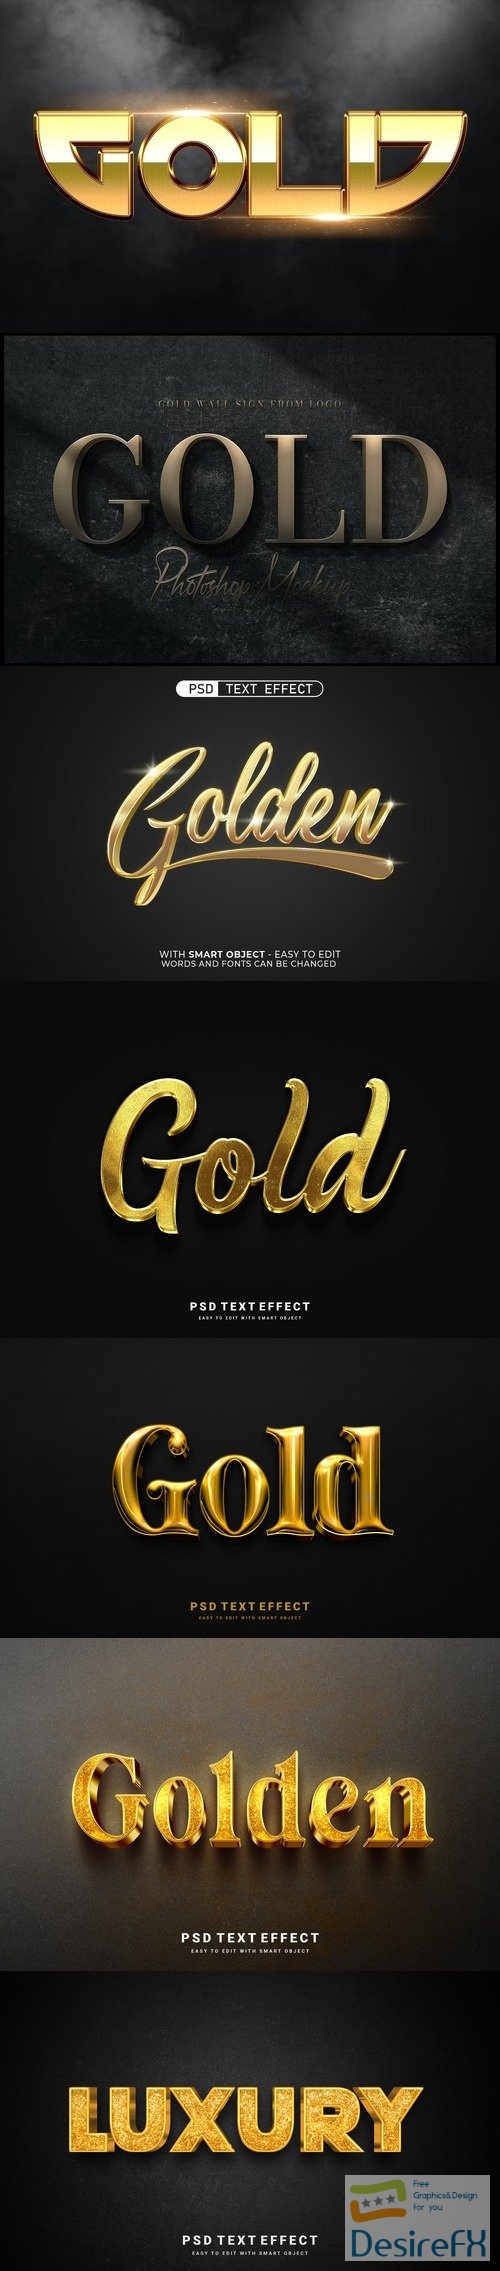 PSD shining gold creative editable text effect design